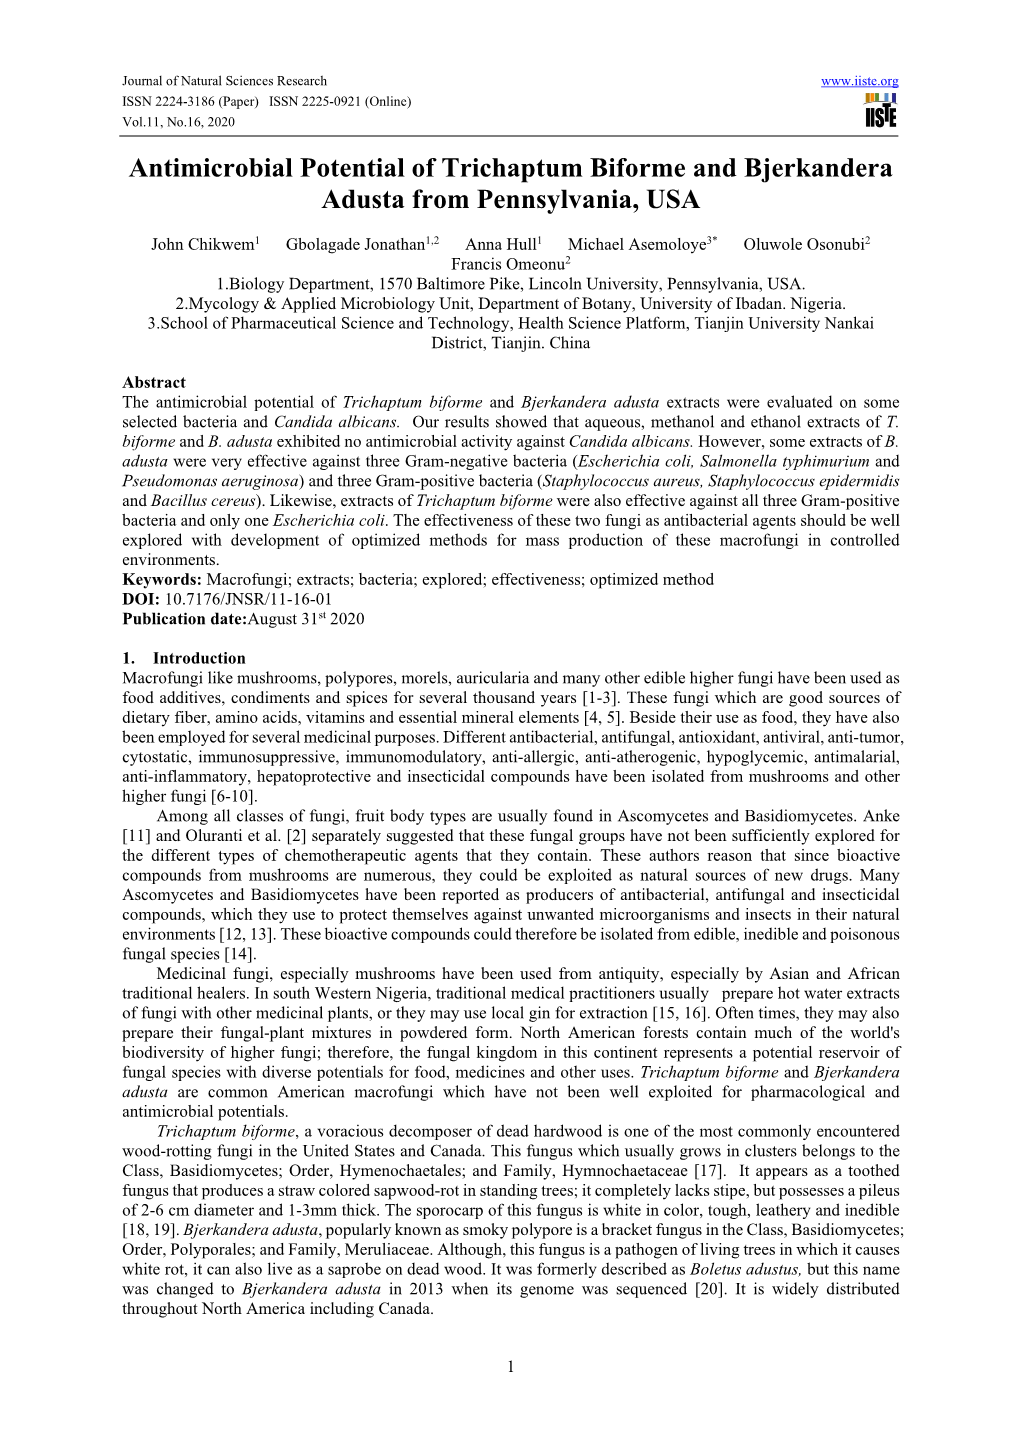 Antimicrobial Potential of Trichaptum Biforme and Bjerkandera Adusta from Pennsylvania, USA